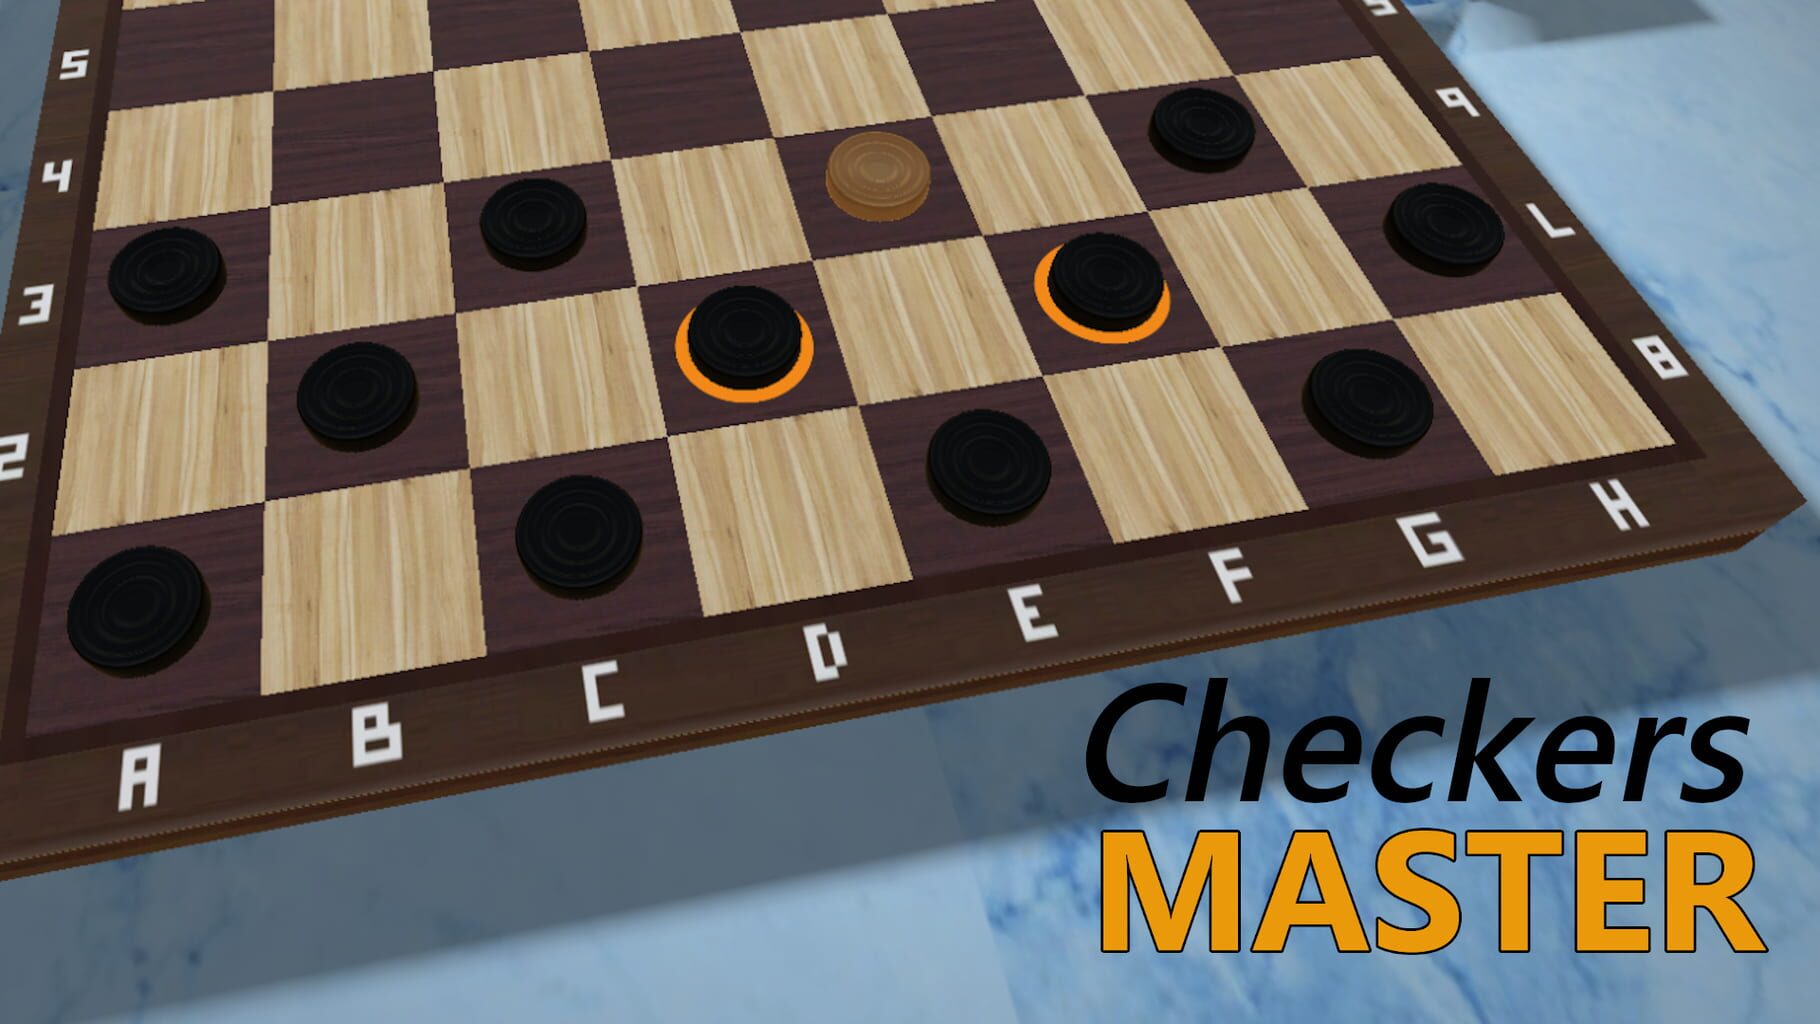 Checkers Master artwork